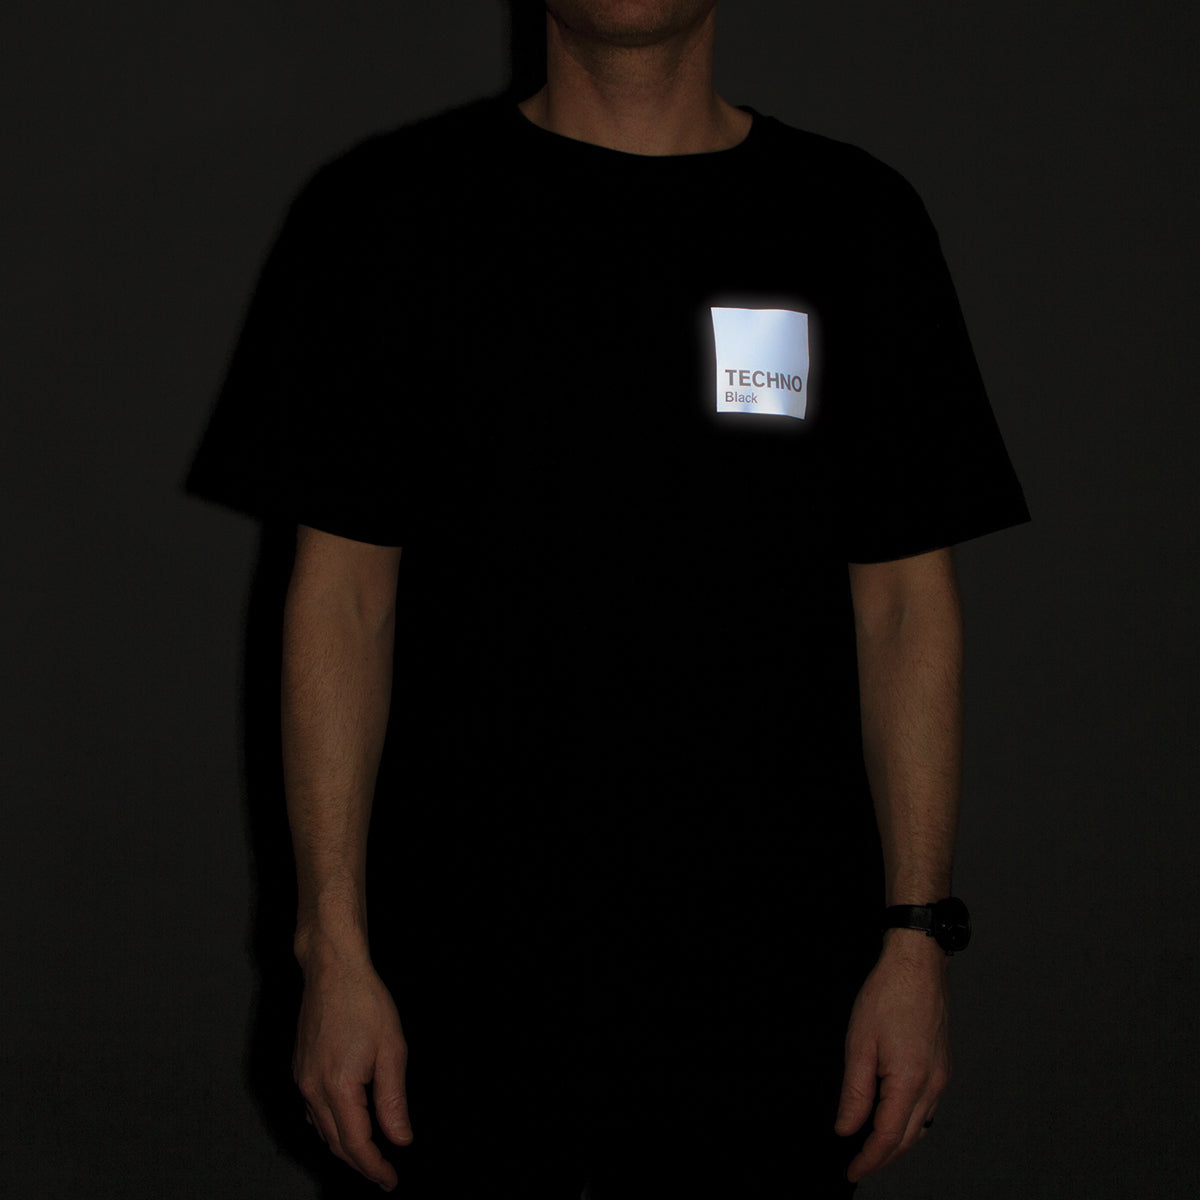 Reflective Box Techno Black - Tshirt - Black - Wasted Heroes